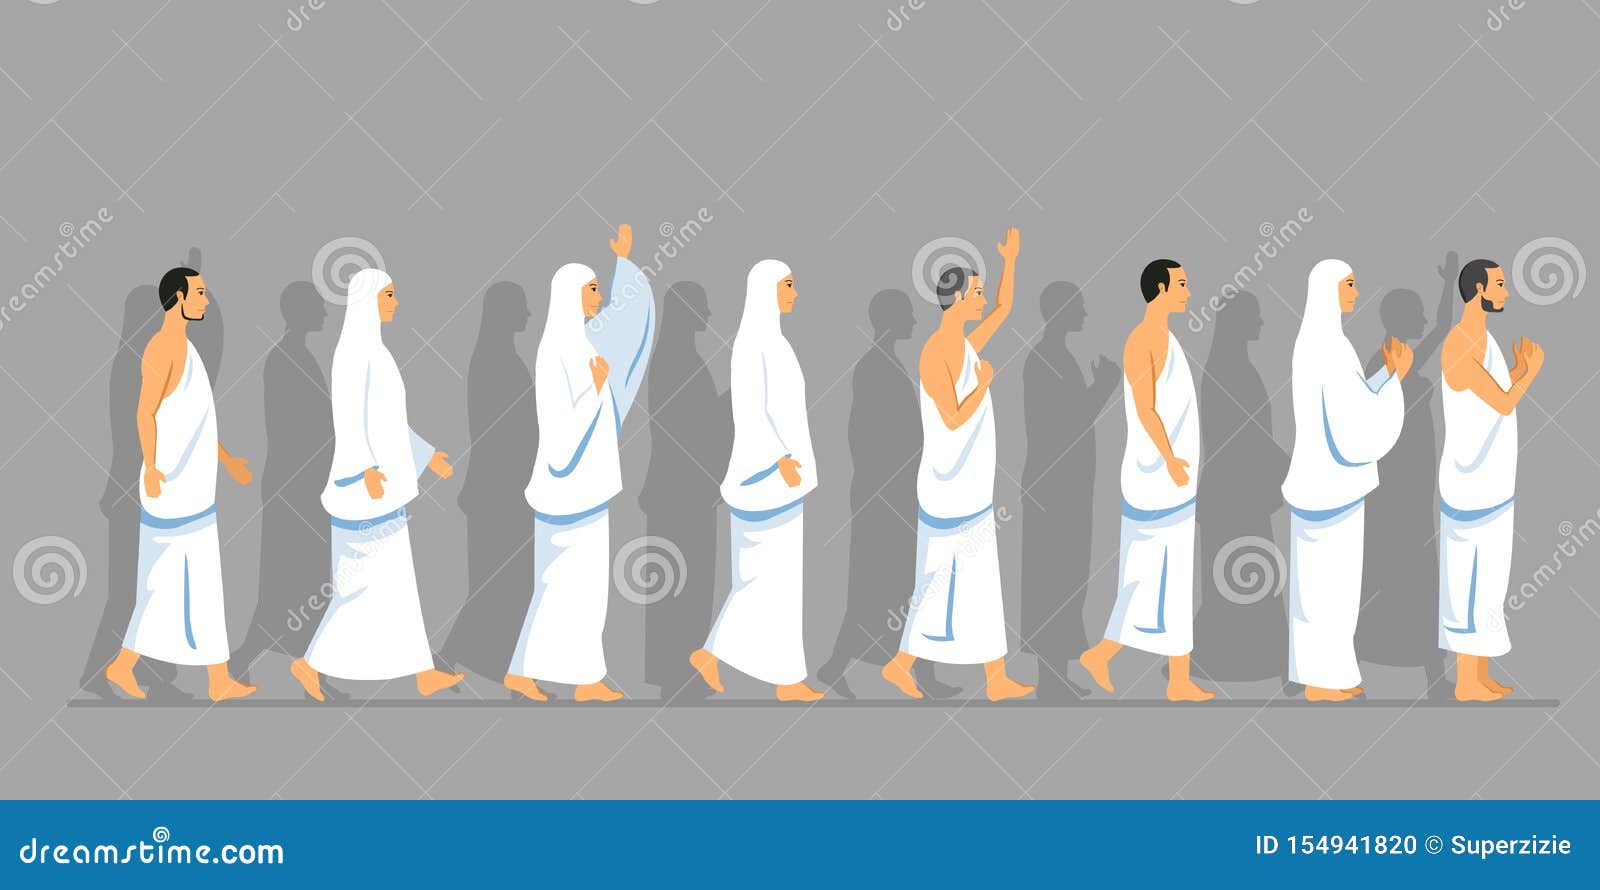 walking pack of hajj pilgrimage in parallel